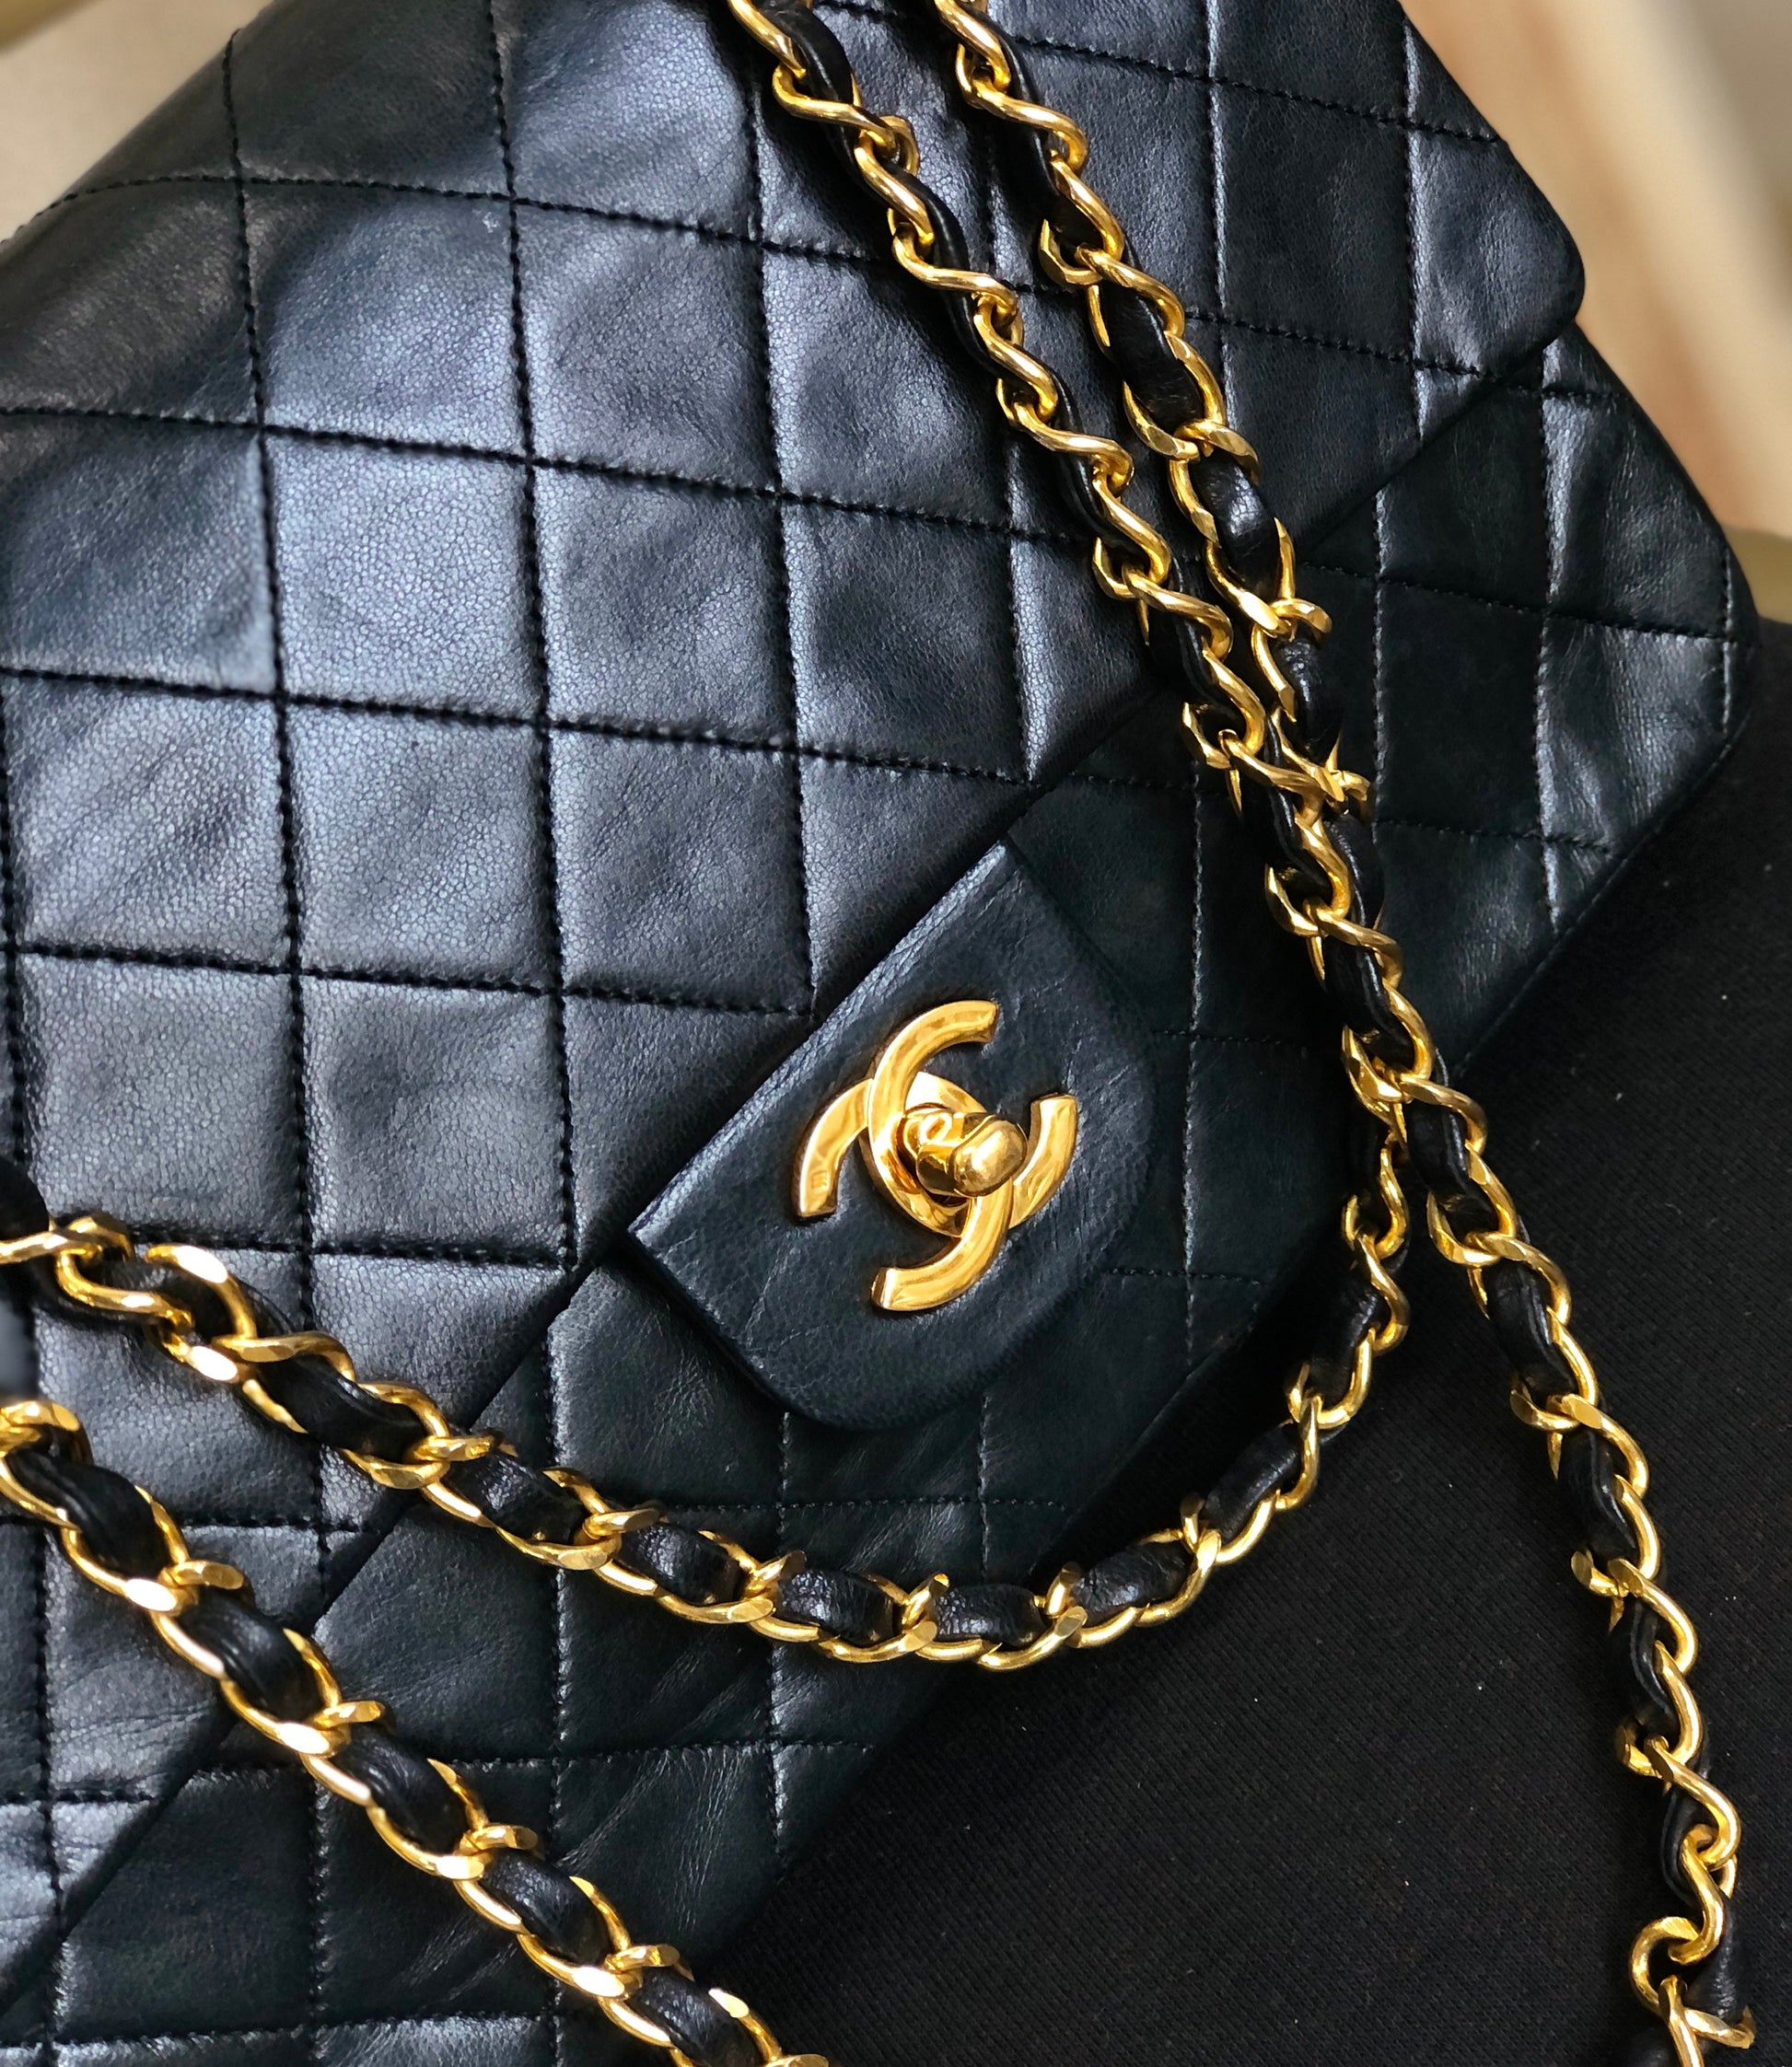 Chanel handbag matrasse with - Gem